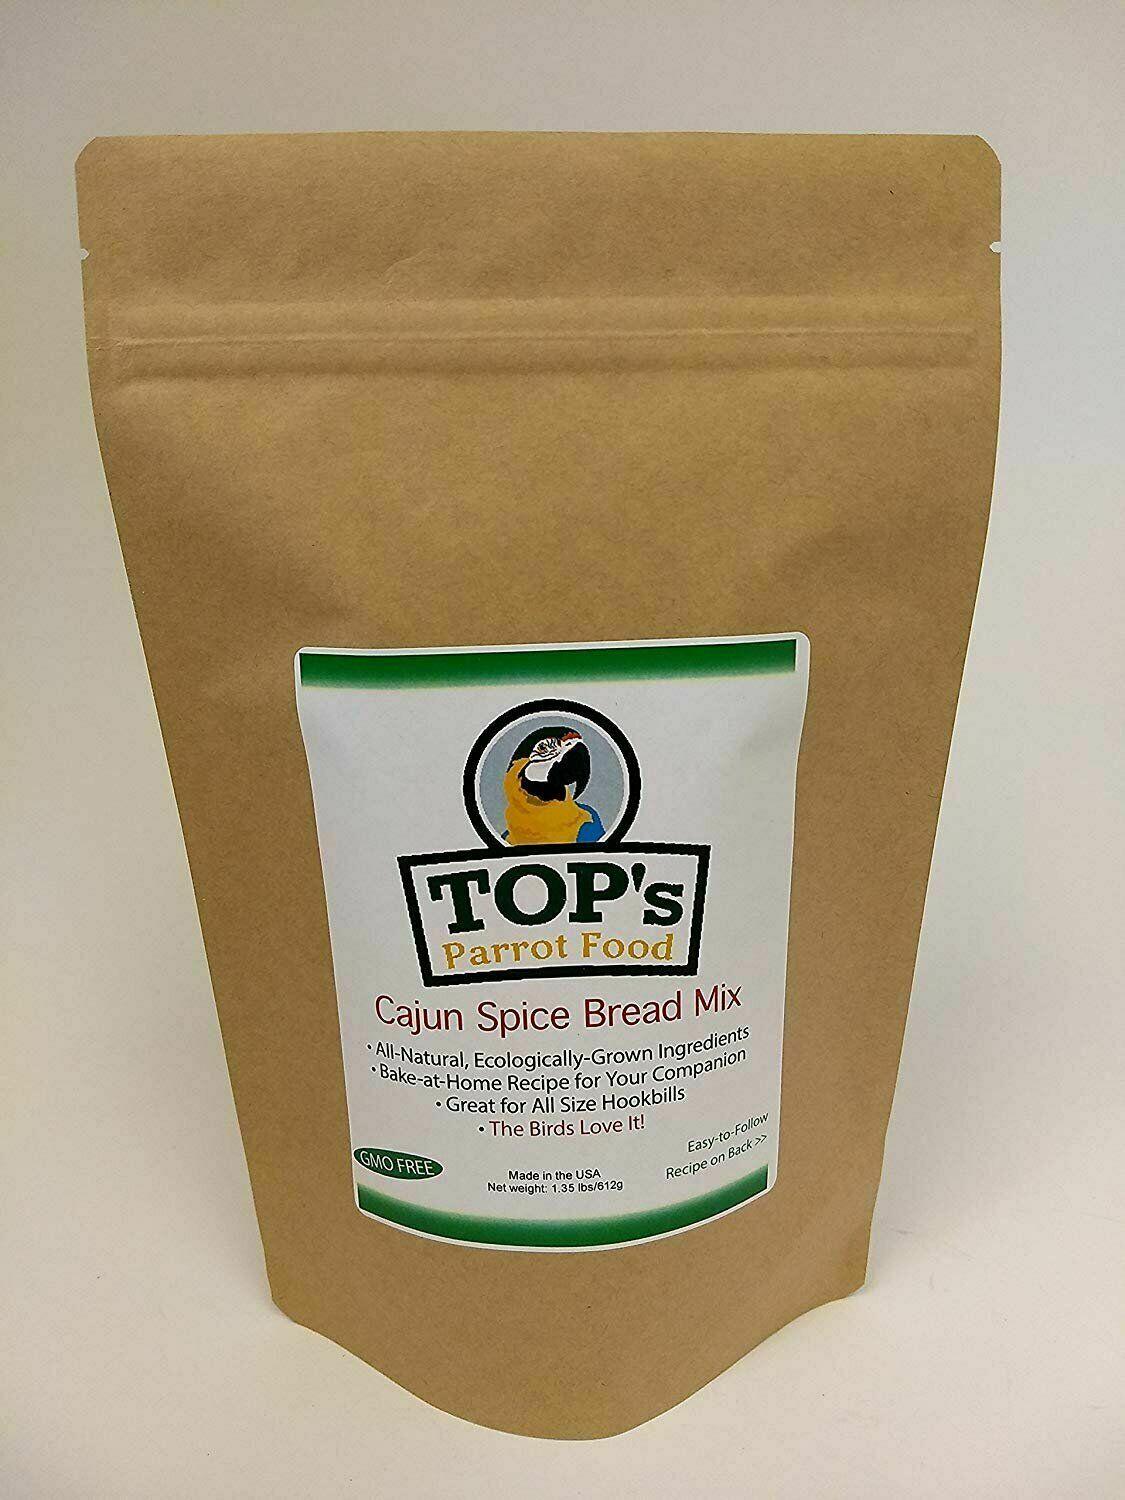 TOP's Parrot Food Bird Bread Food Mix - Cajun Spice